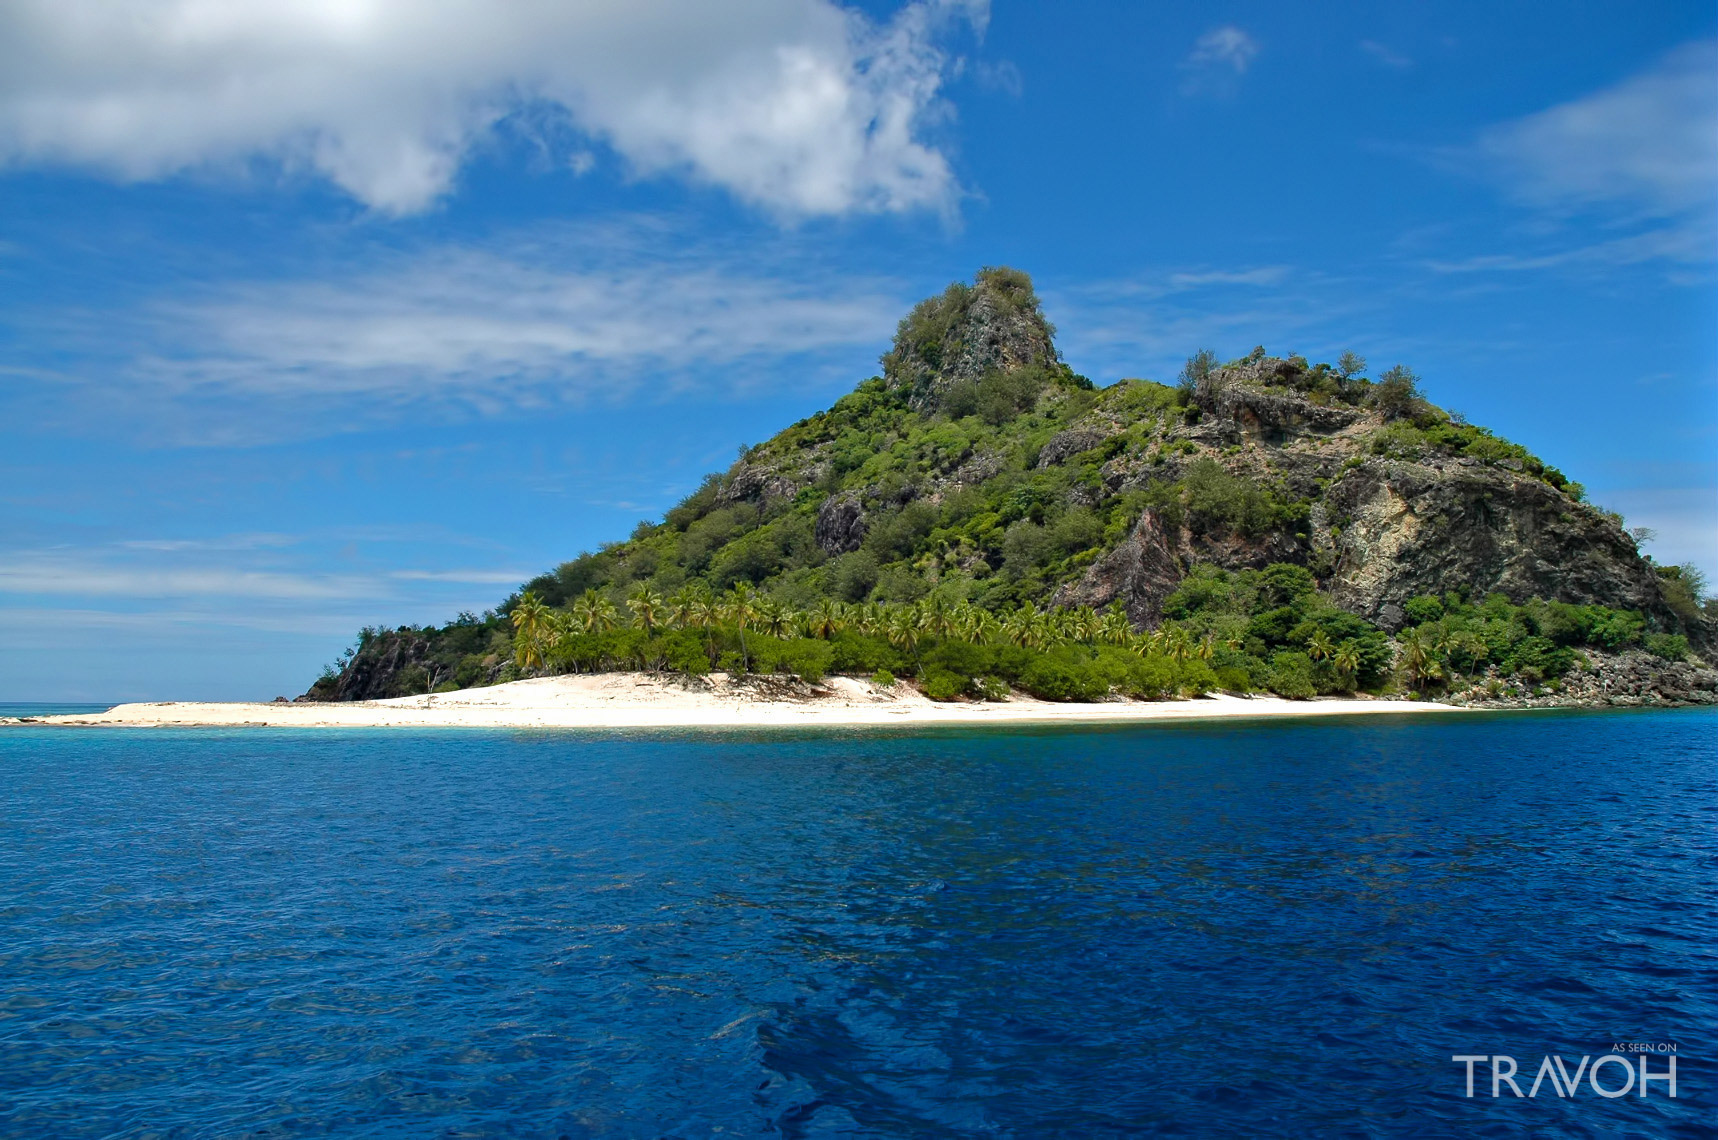 Monuriki Island – Exploring 10 of the Top Beach Locations on the Islands of Fiji